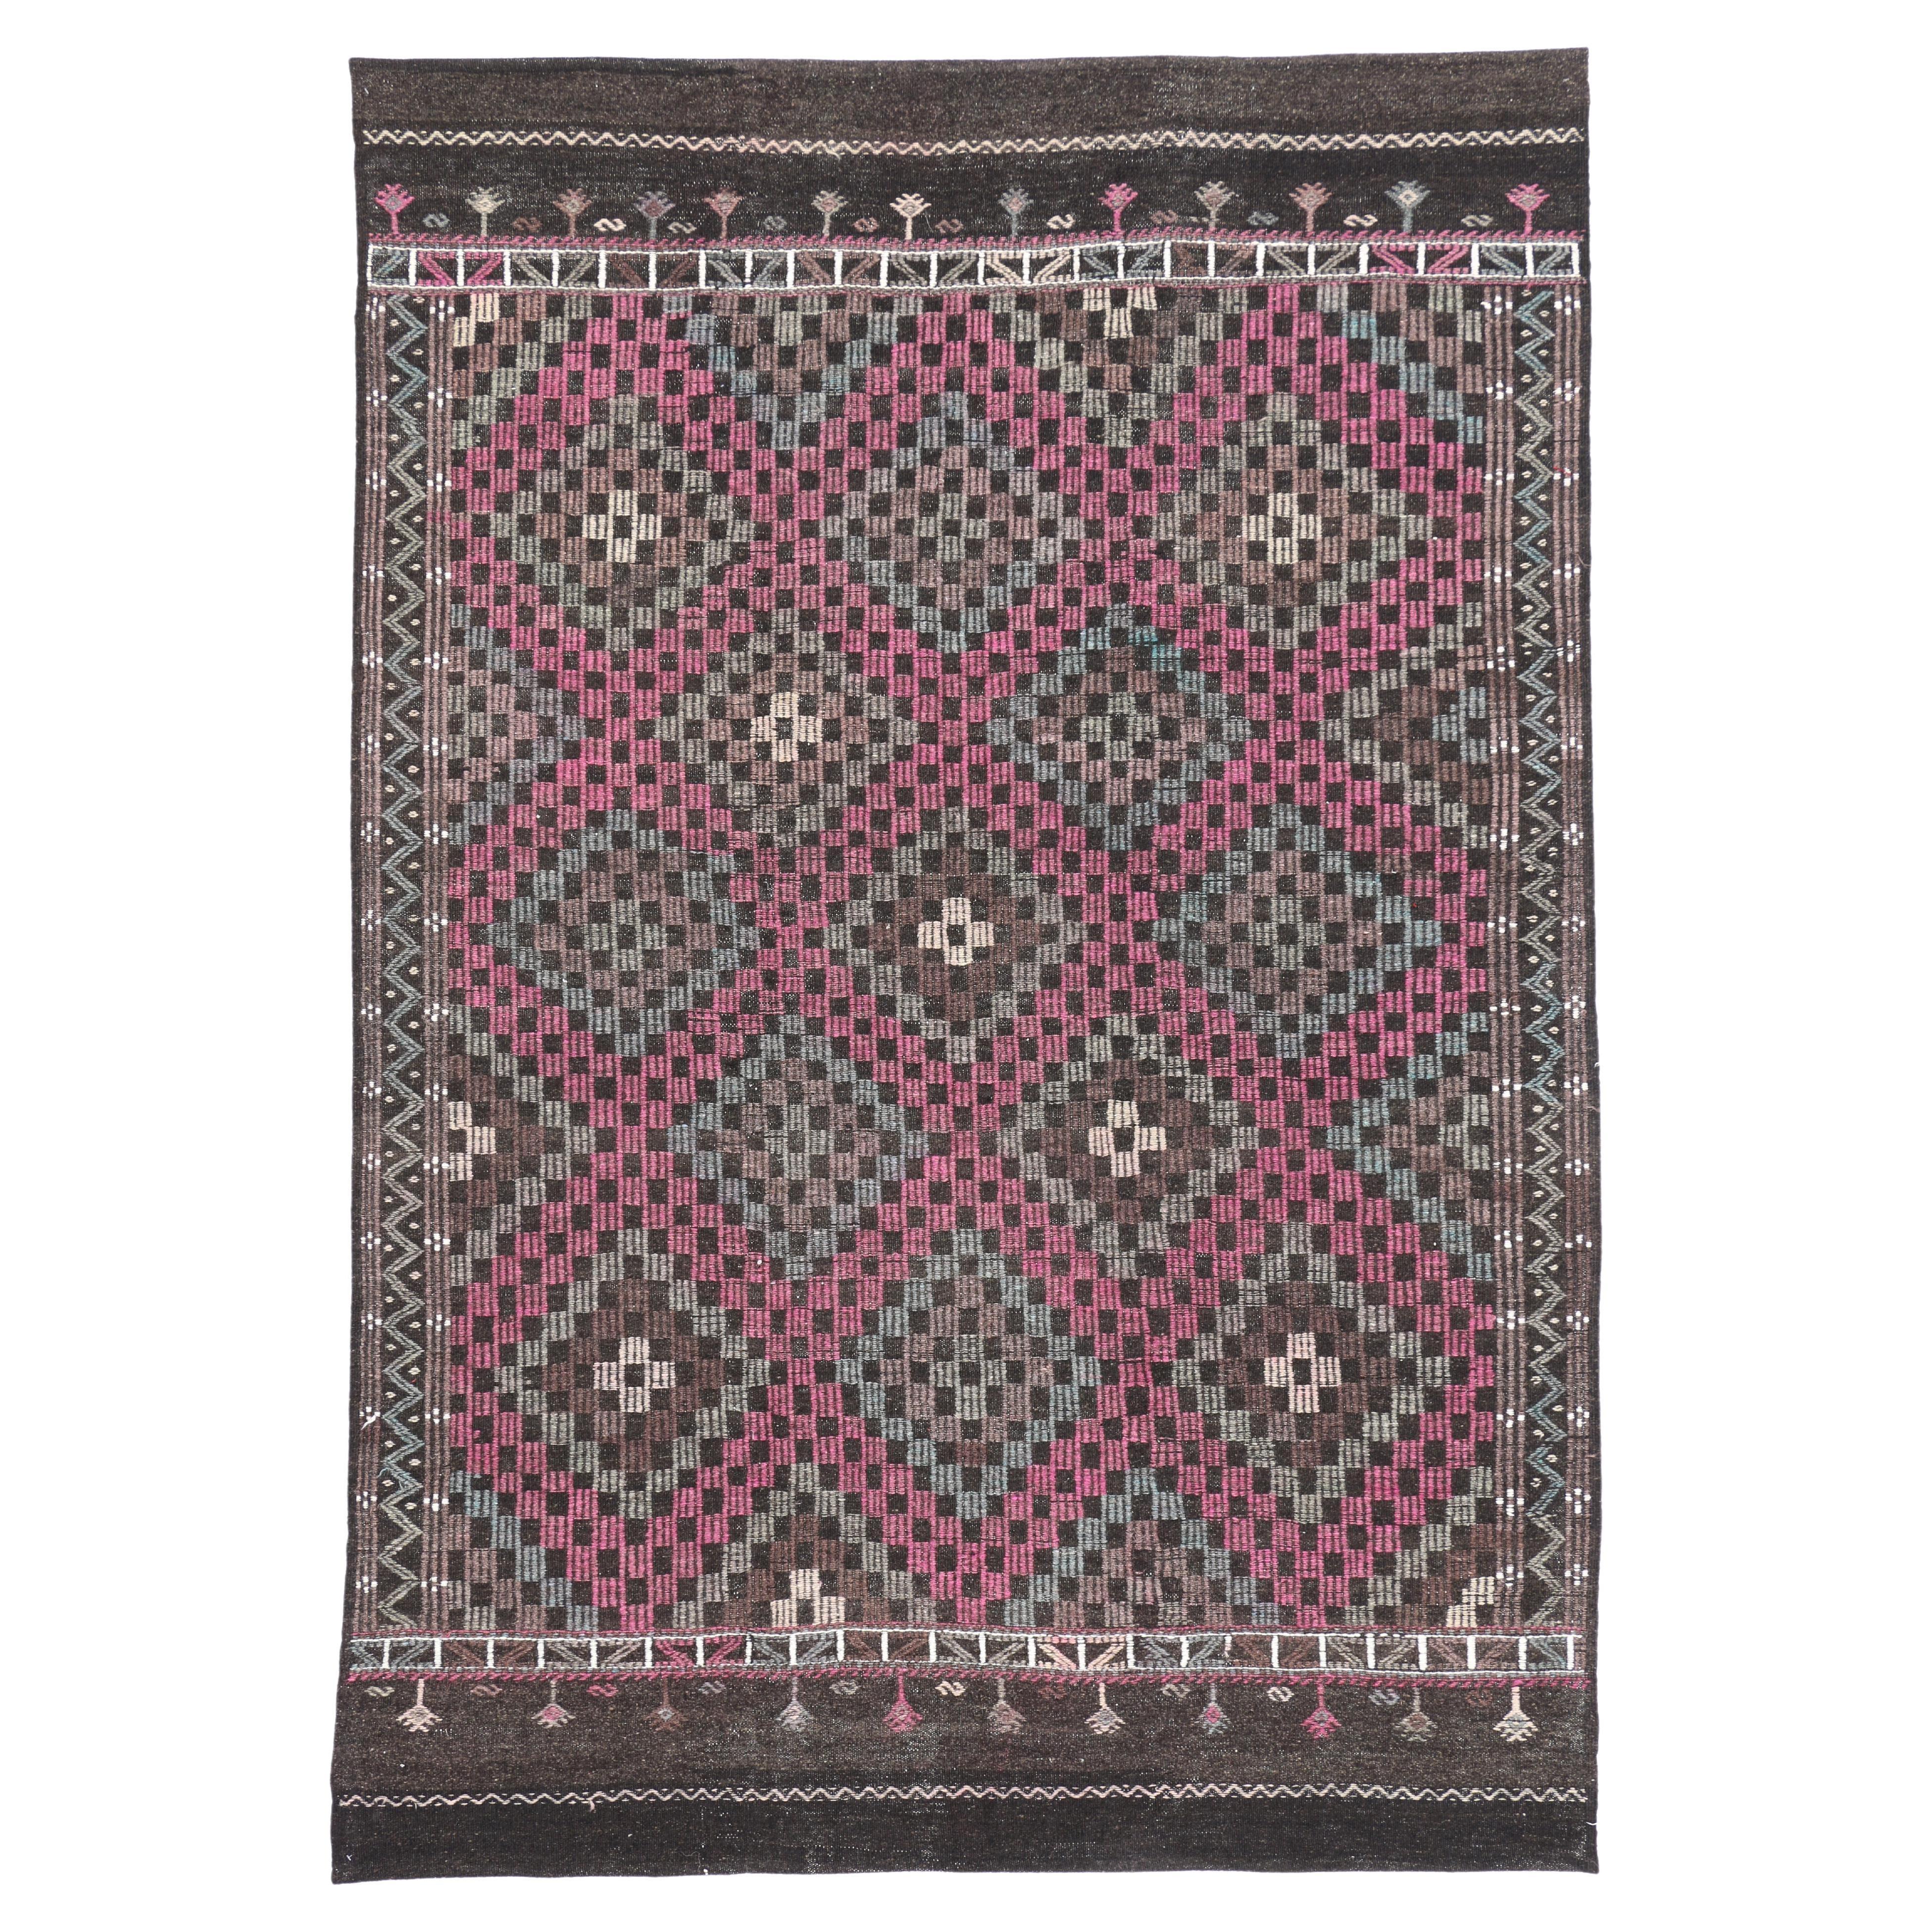 Tapis Kilim turc vintage avec style industriel féminin, tapis Kilim tissé à plat en vente